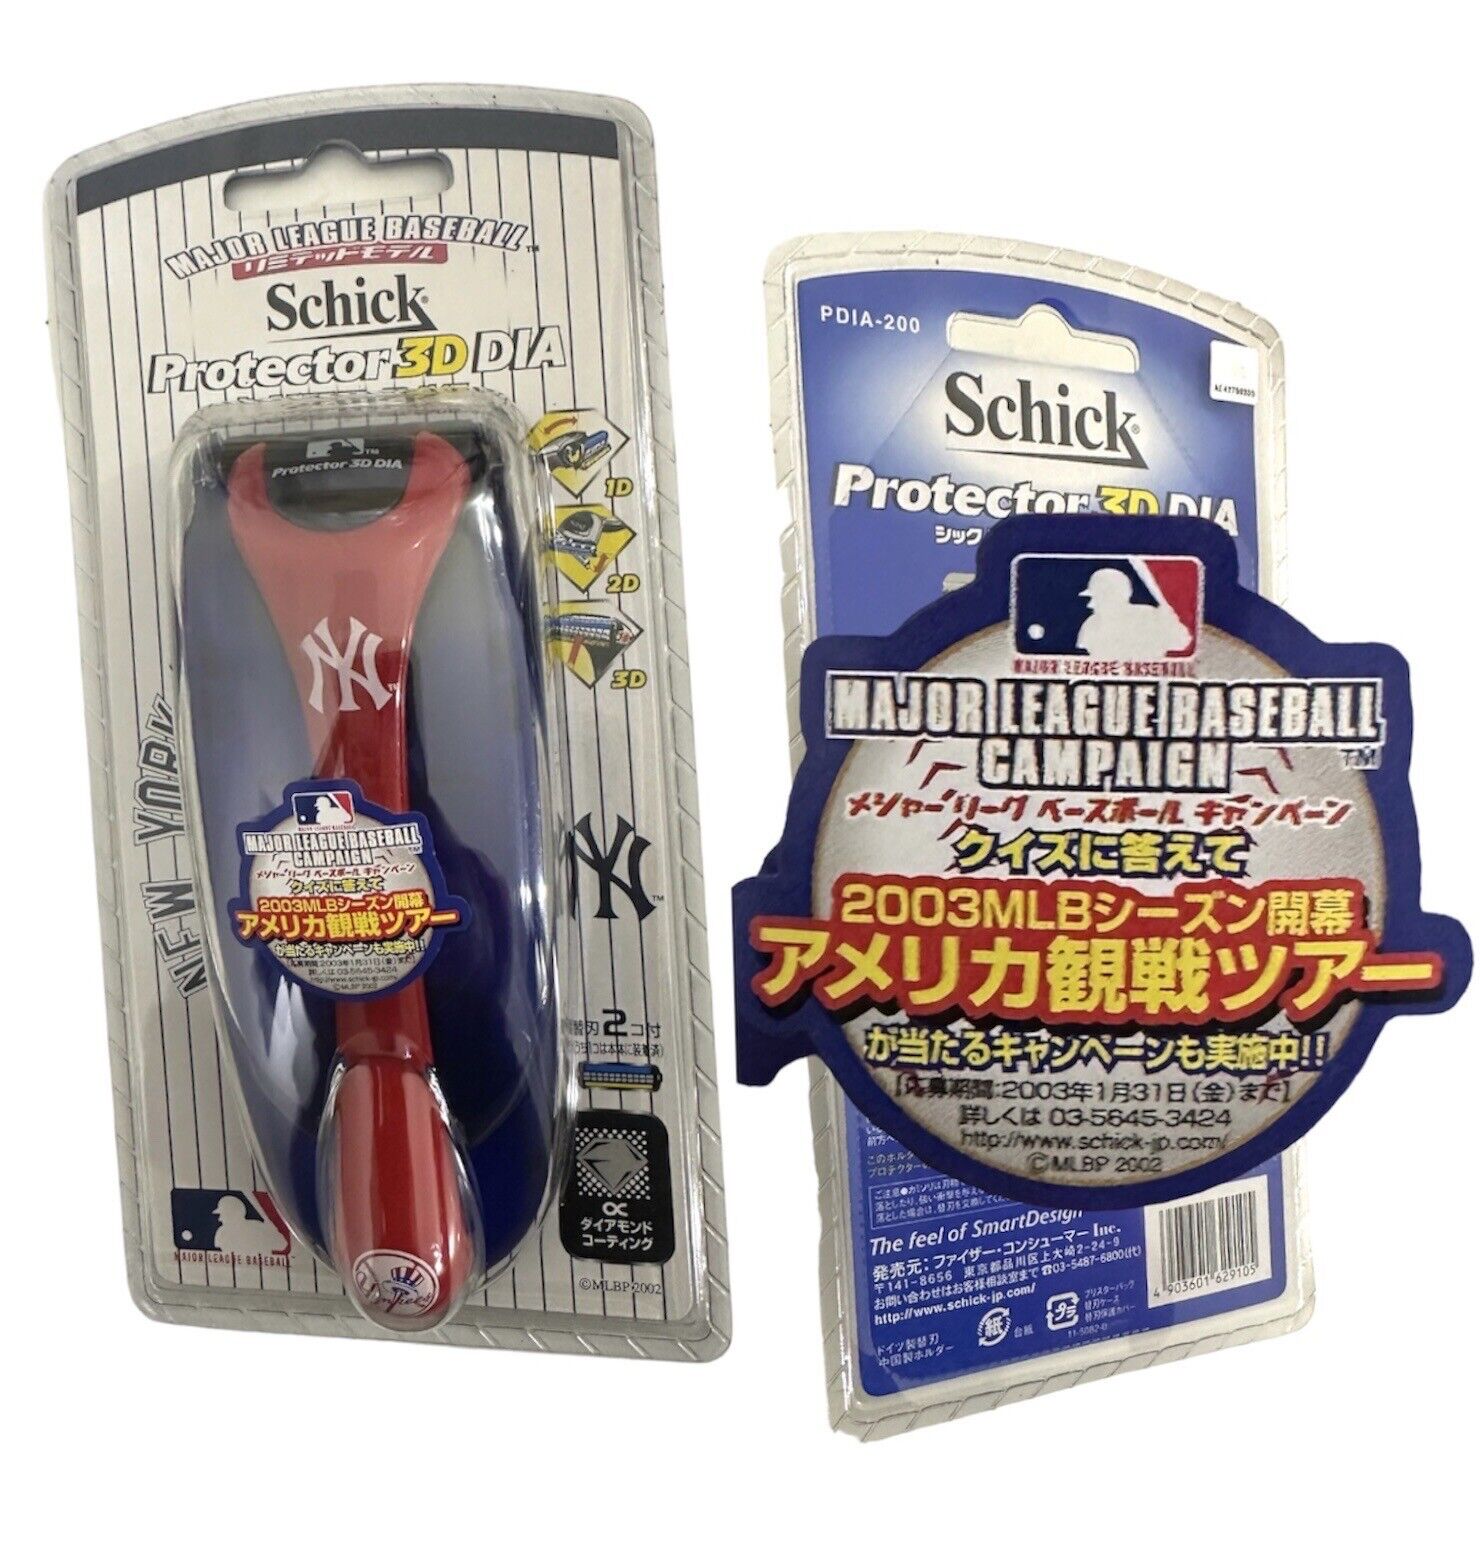 Vintage Schick Protector 3D DIA Razor Japan Edition New York Yankees 2002